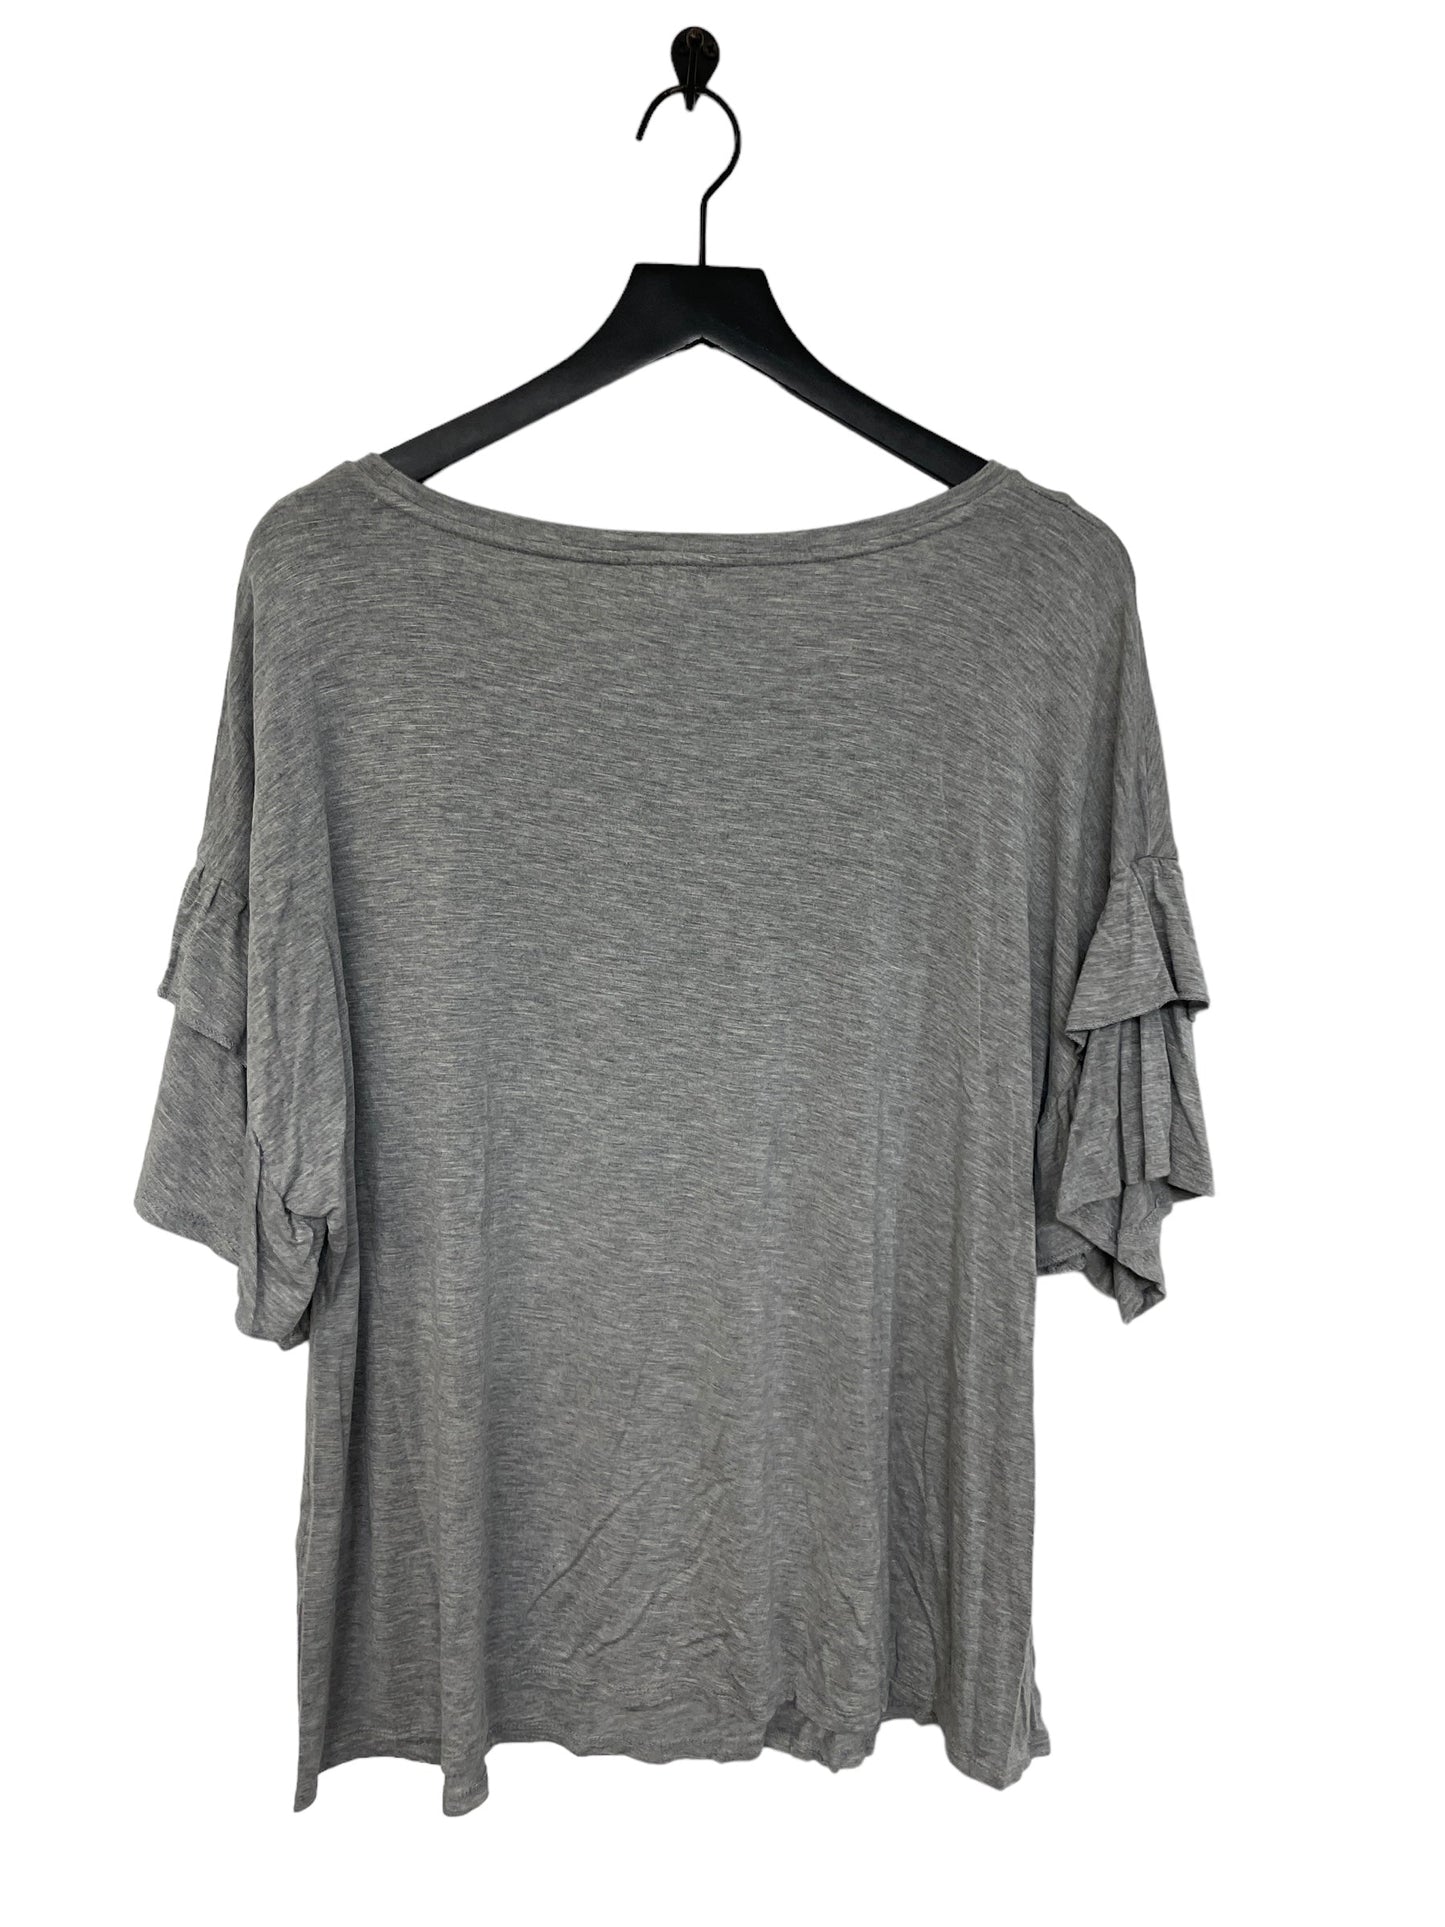 Grey Top Short Sleeve Basic Westport, Size 2x